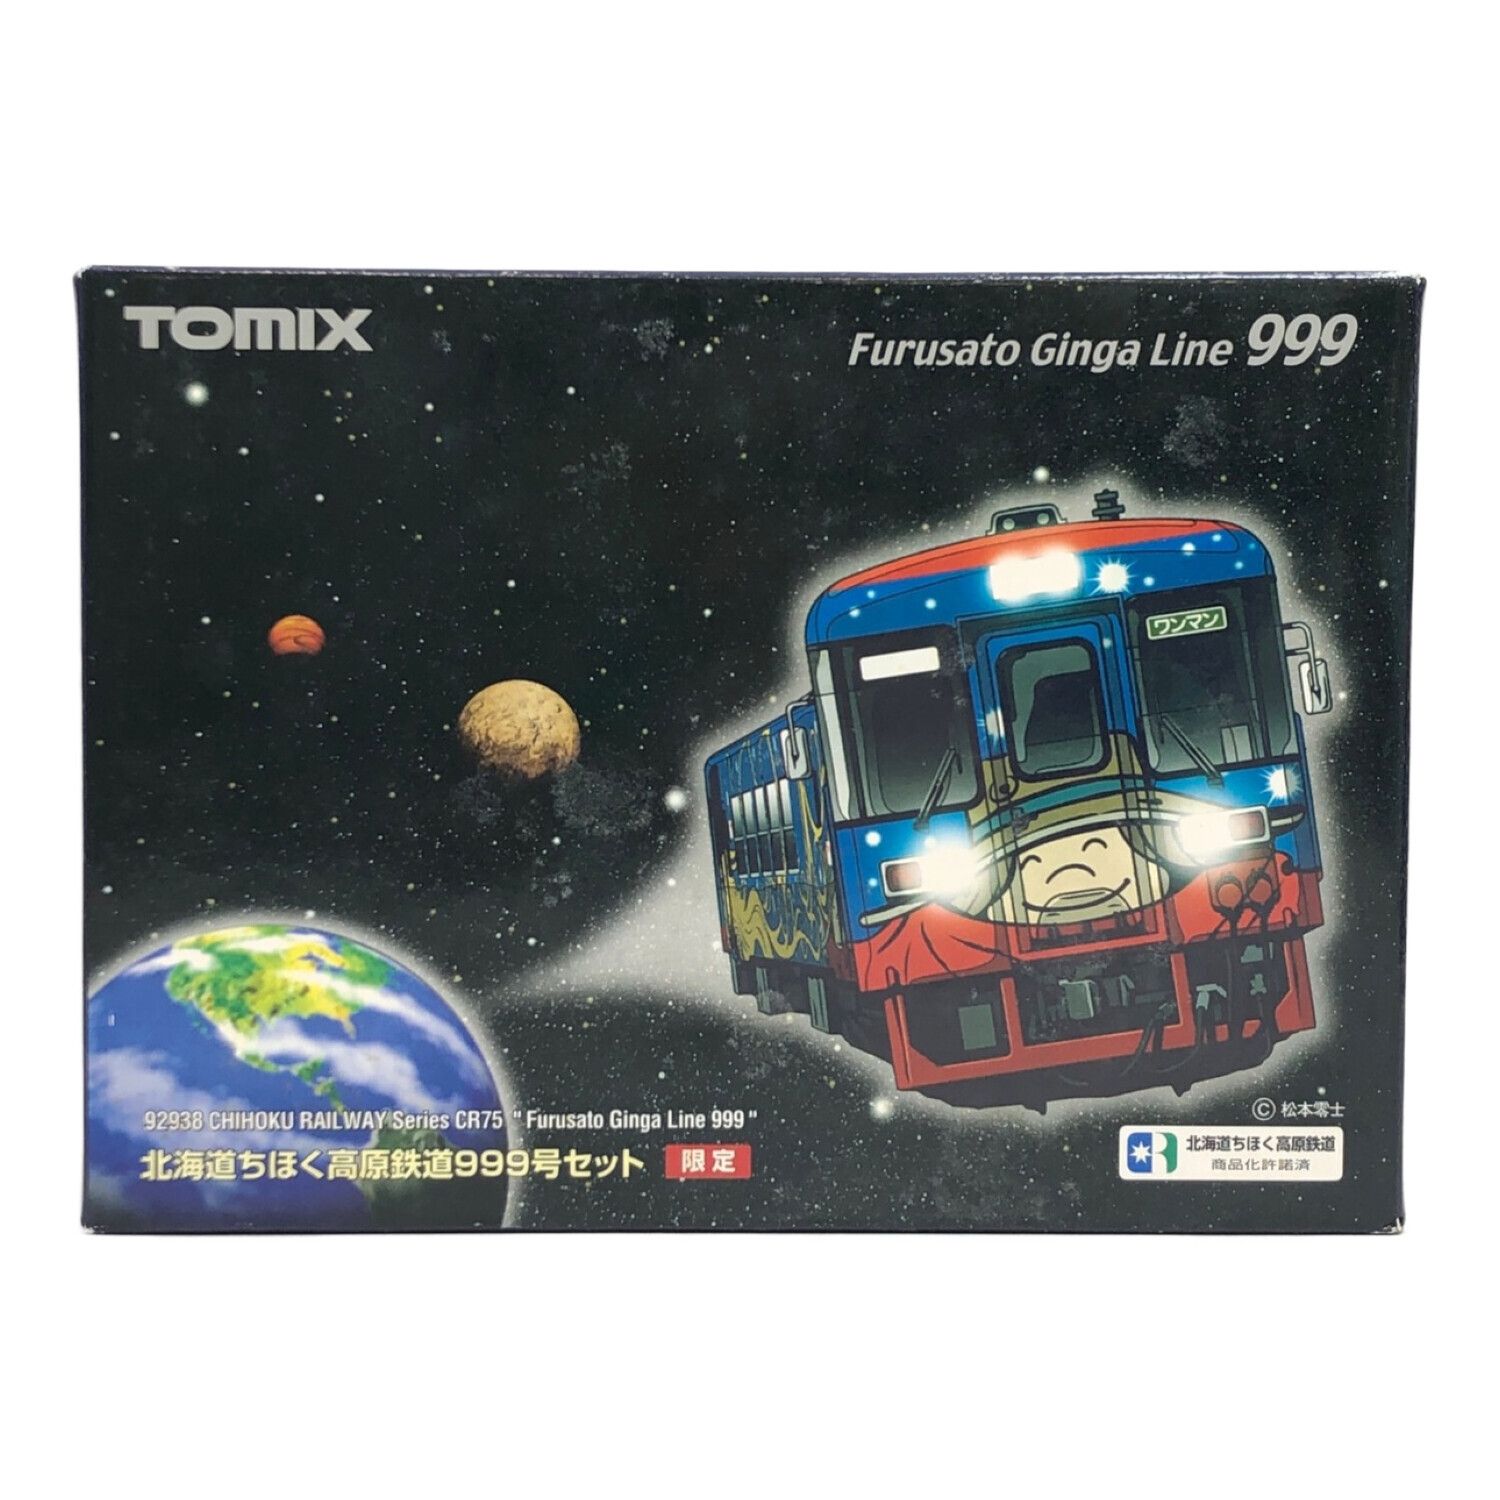 TOMIX (トミックス) Nゲージ 北海道ちほく高原鉄道999号セット 